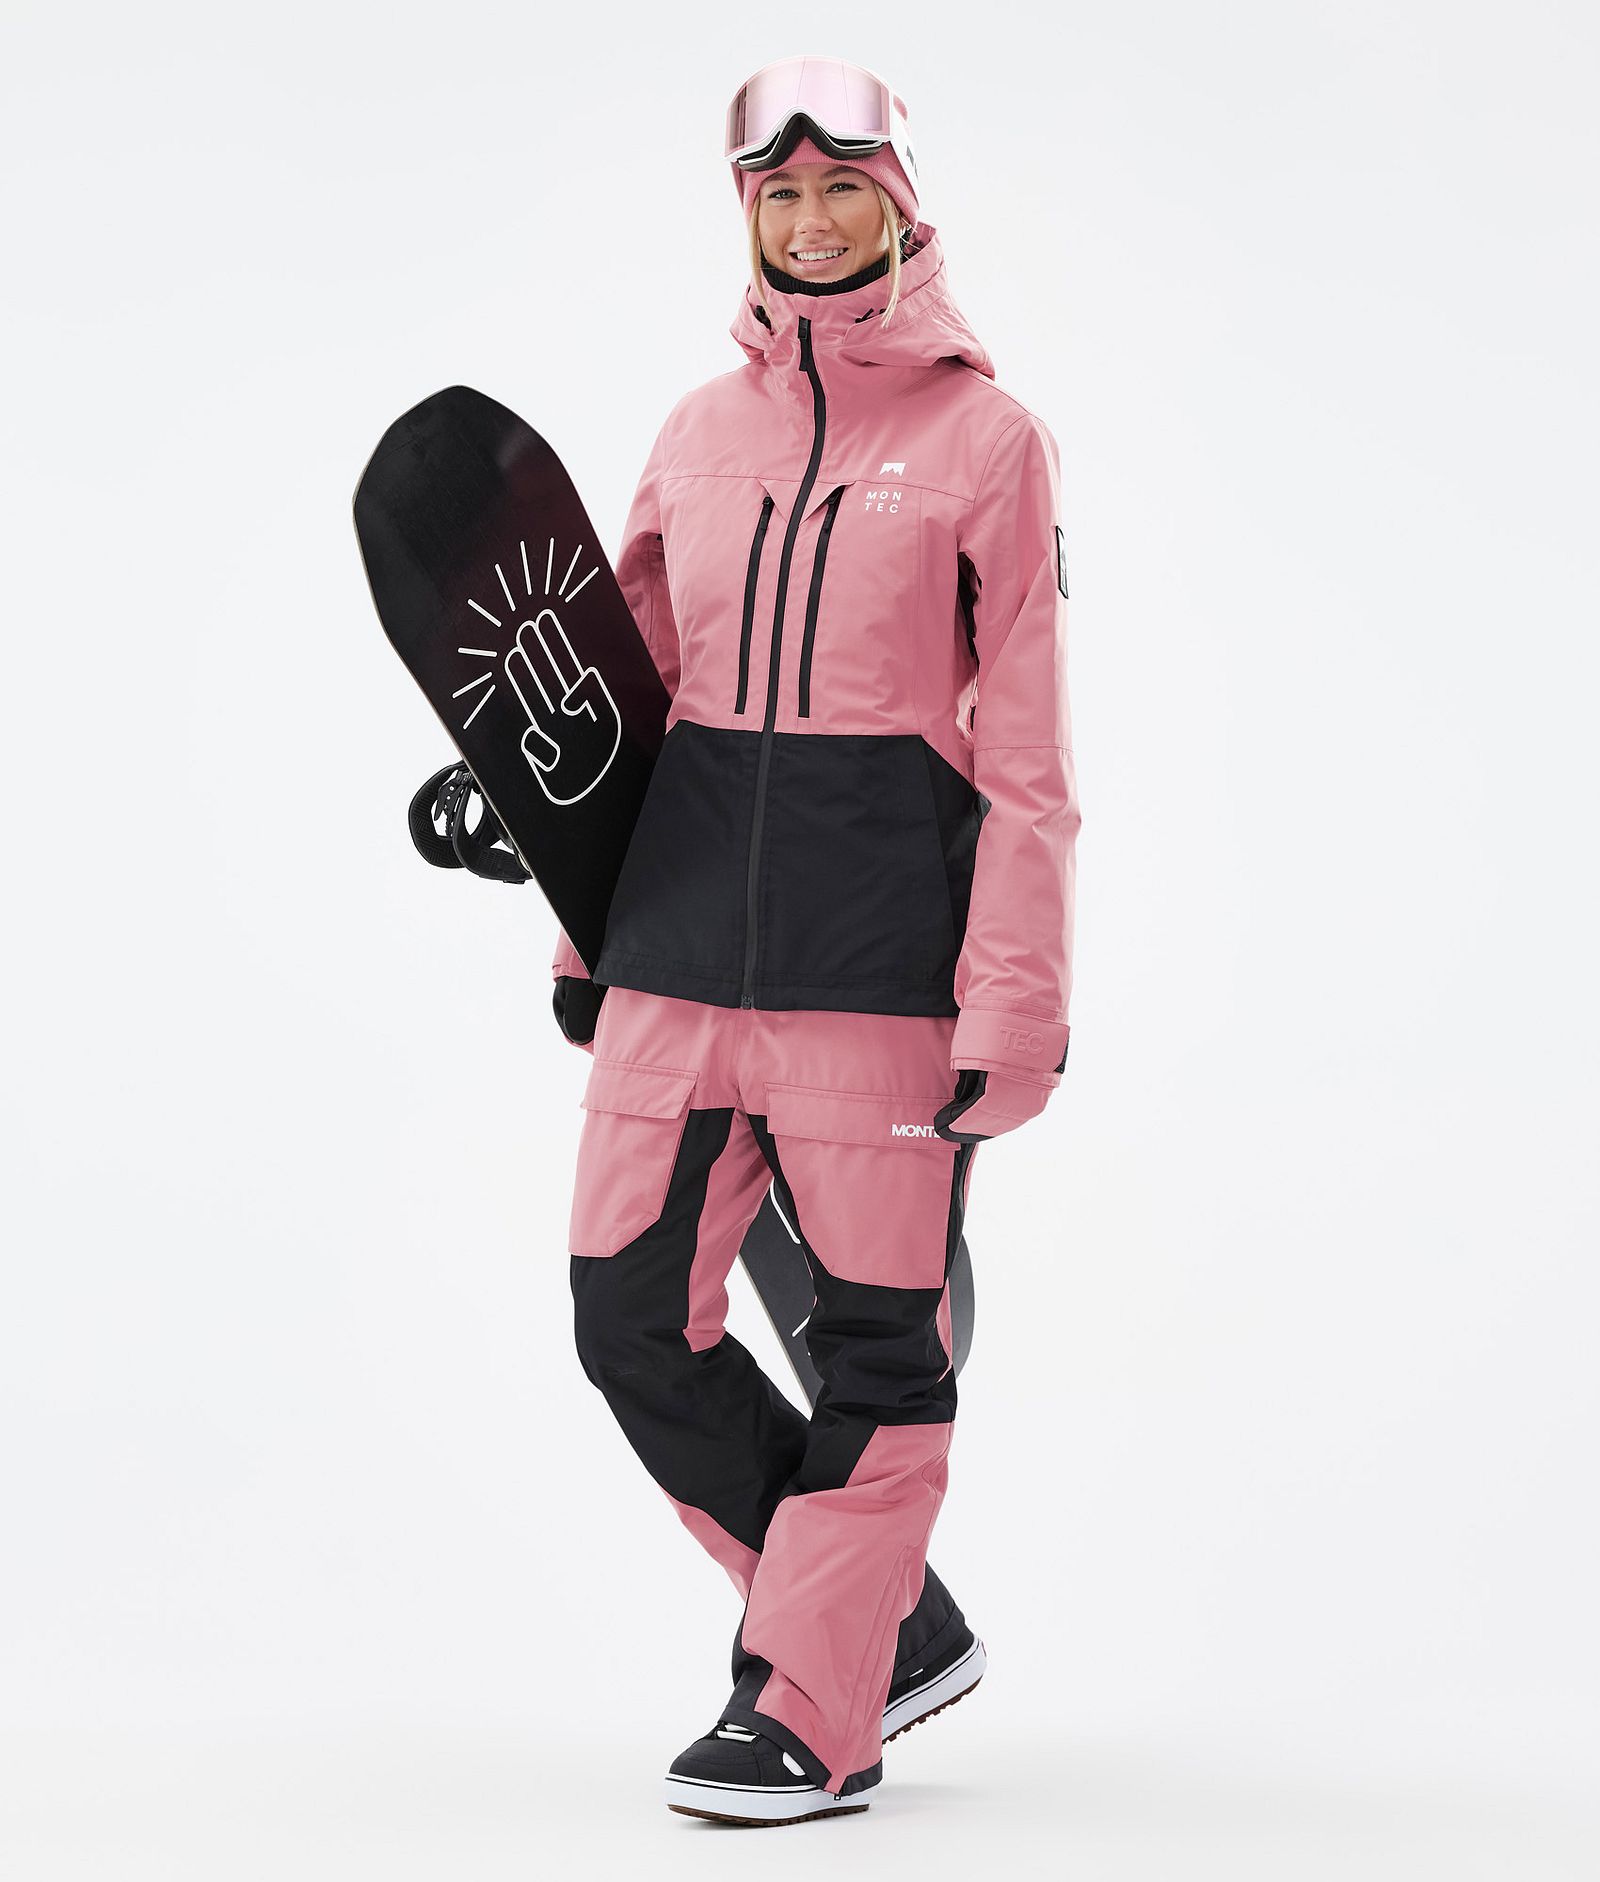 Moss W Giacca Snowboard Donna Pink/Black